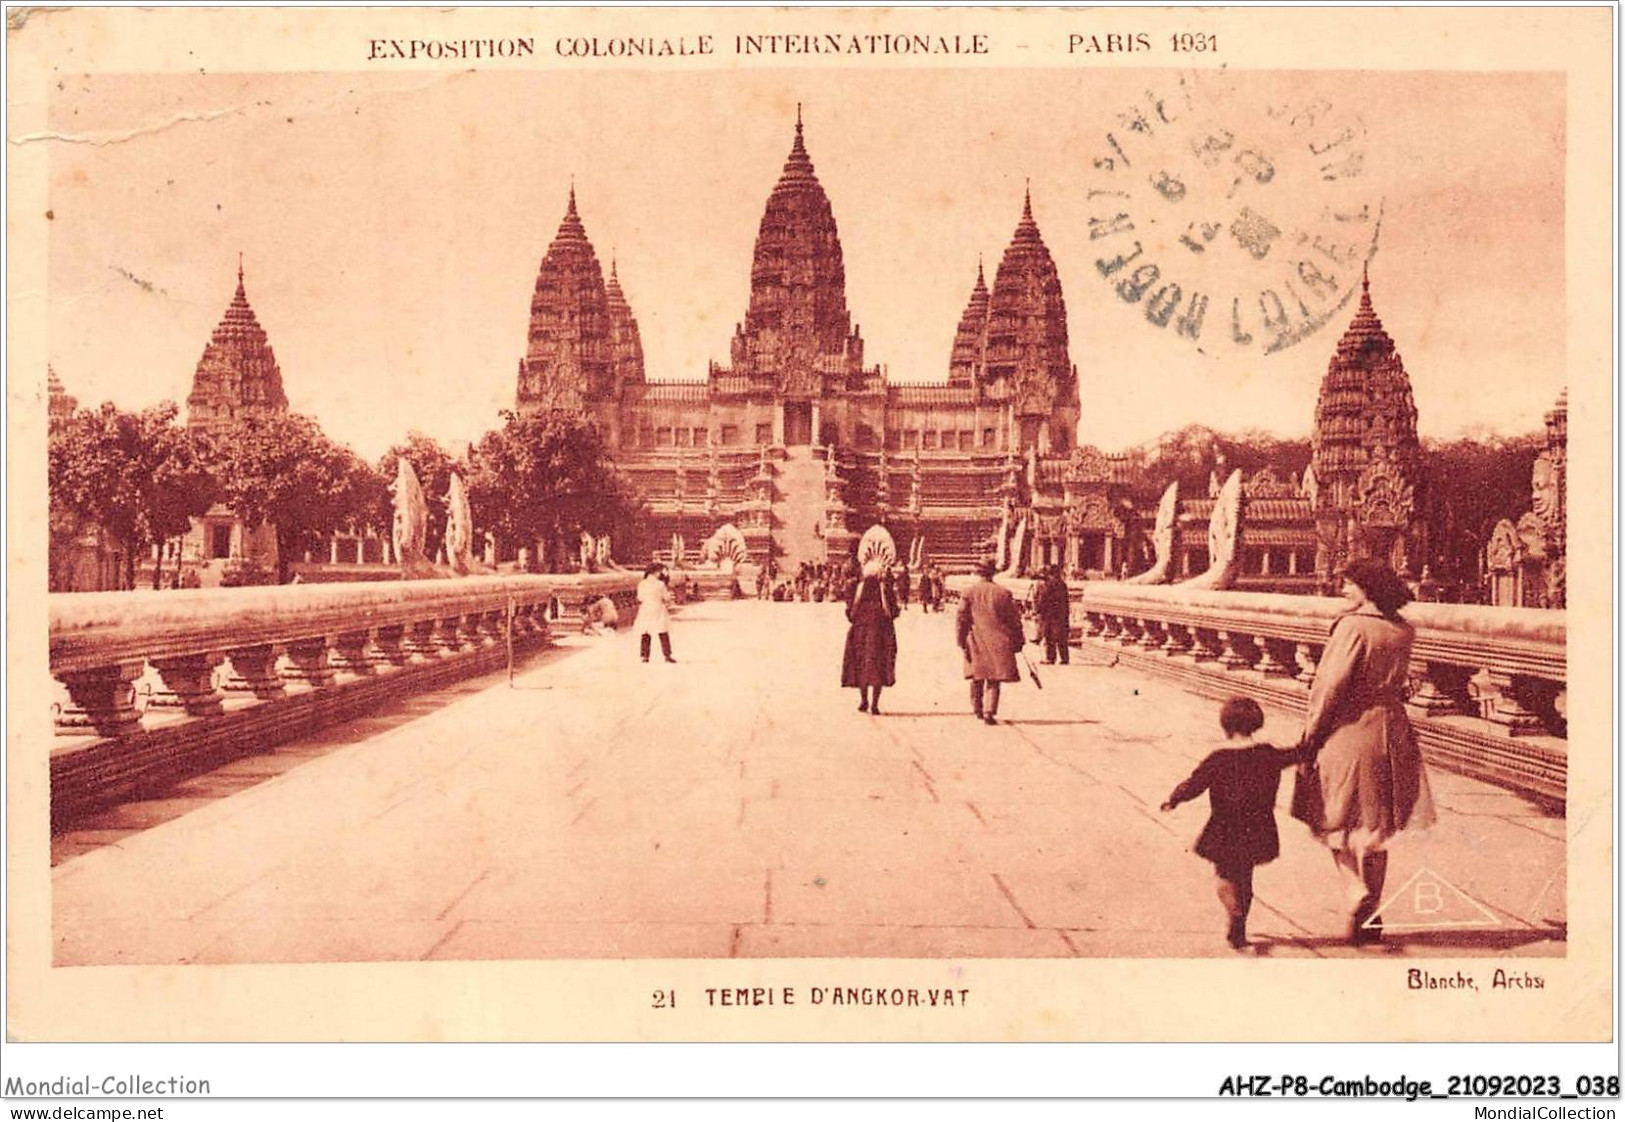 AHZP8-CAMBODGE-0702 - EXPOSITION COLONIALE INTERNATIONALE - PARIS 1931 - TEMPLE D'ANGKOR-VAT - Cambodge